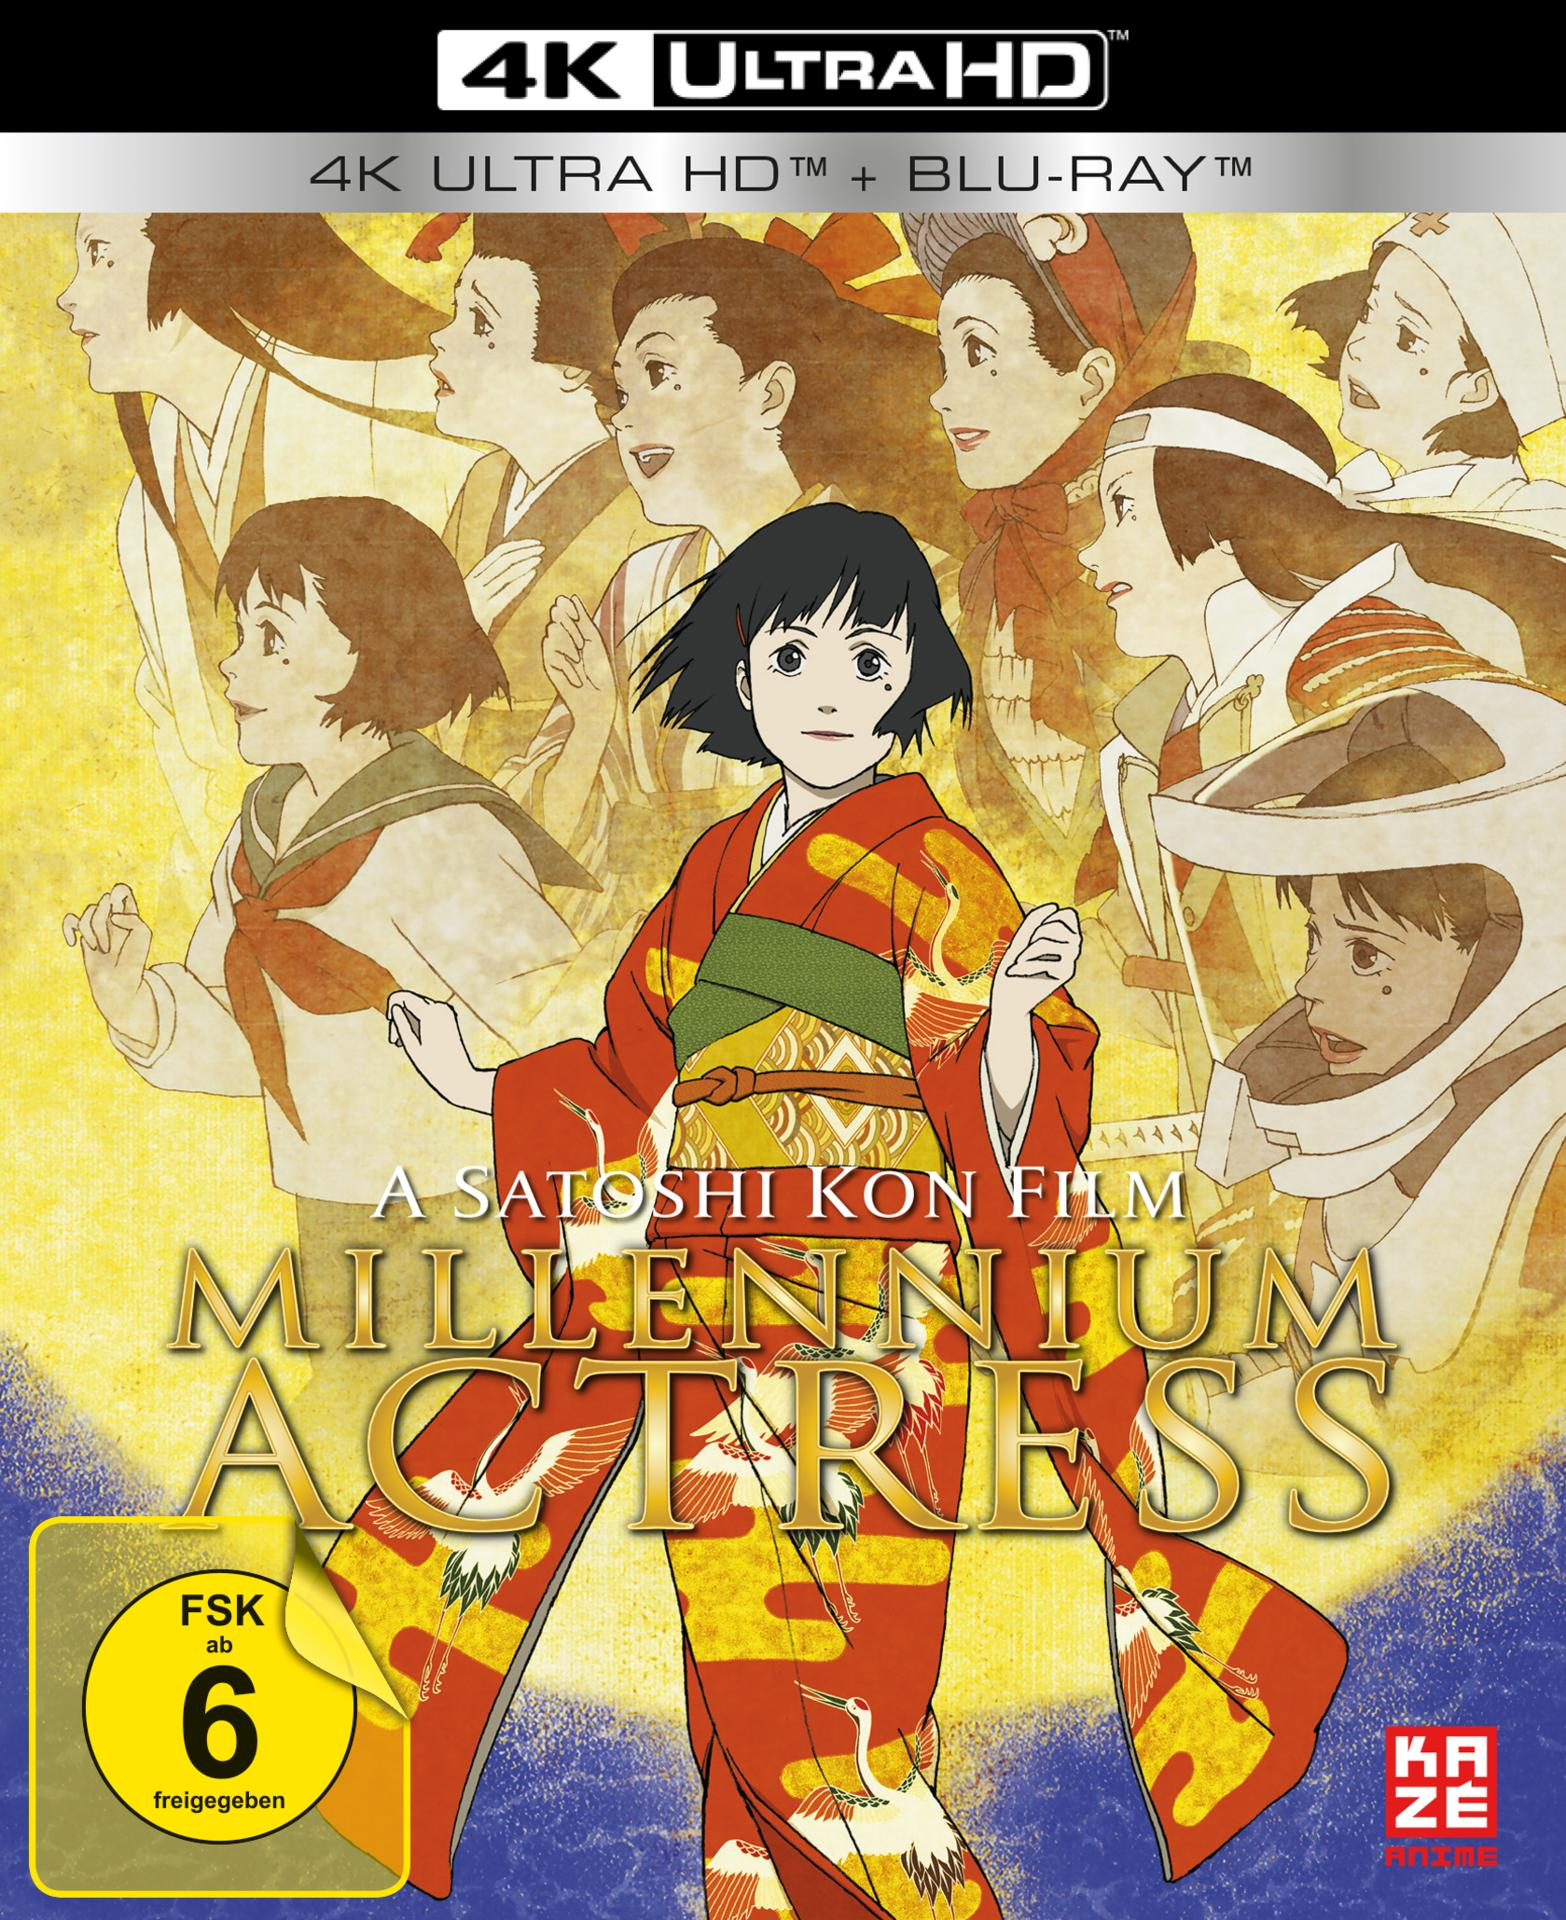 Millennium Actress 4K Ultra HD + Blu-ray Blu-ray